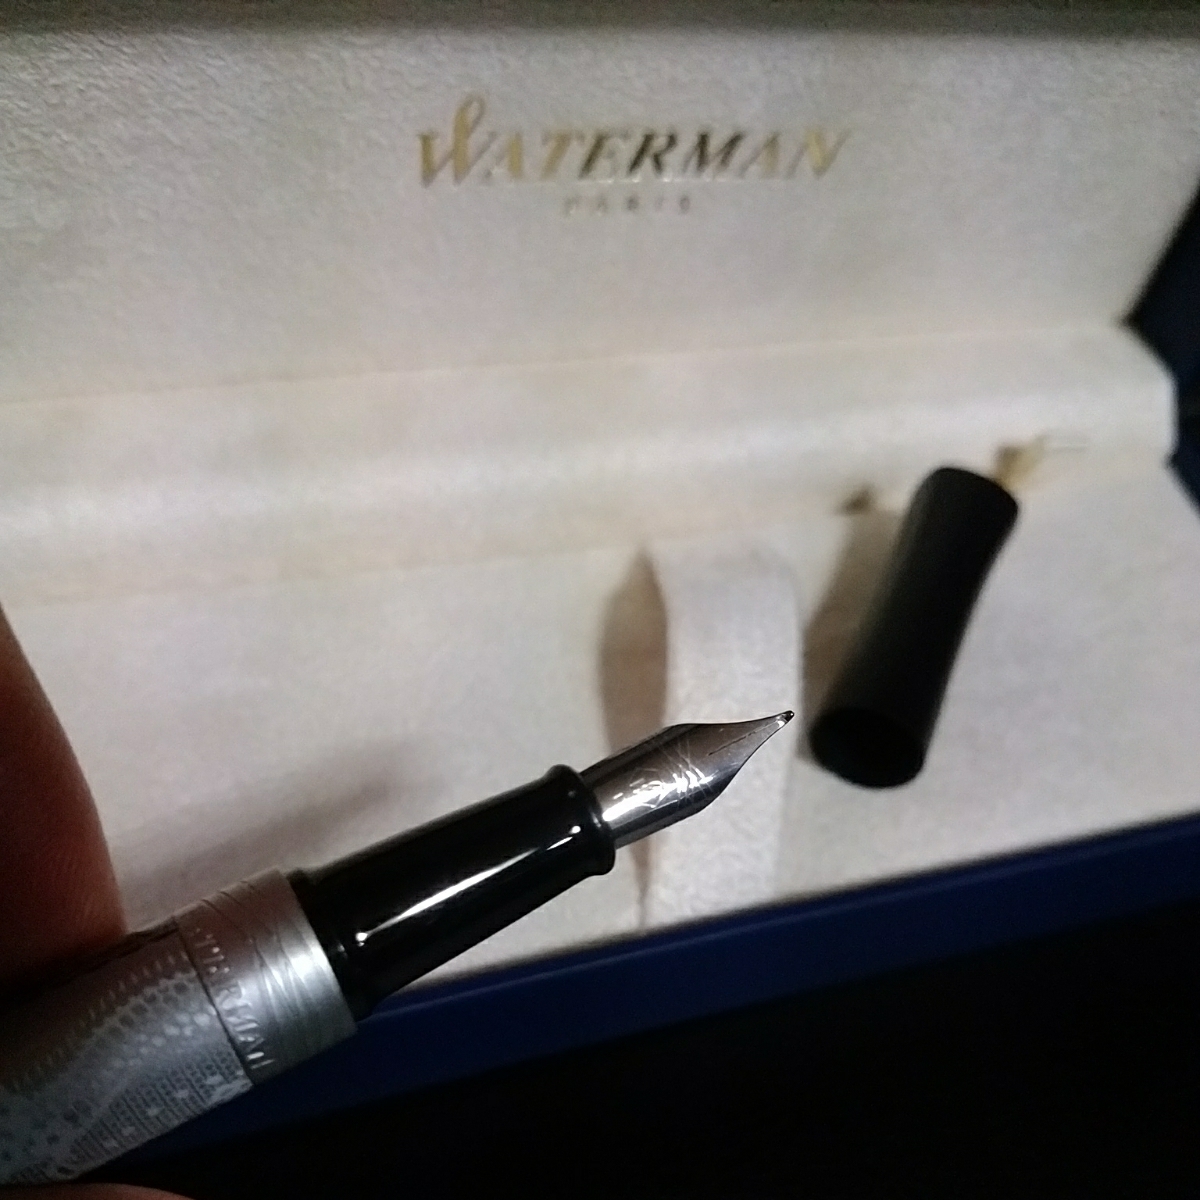  Waterman fountain pen order s